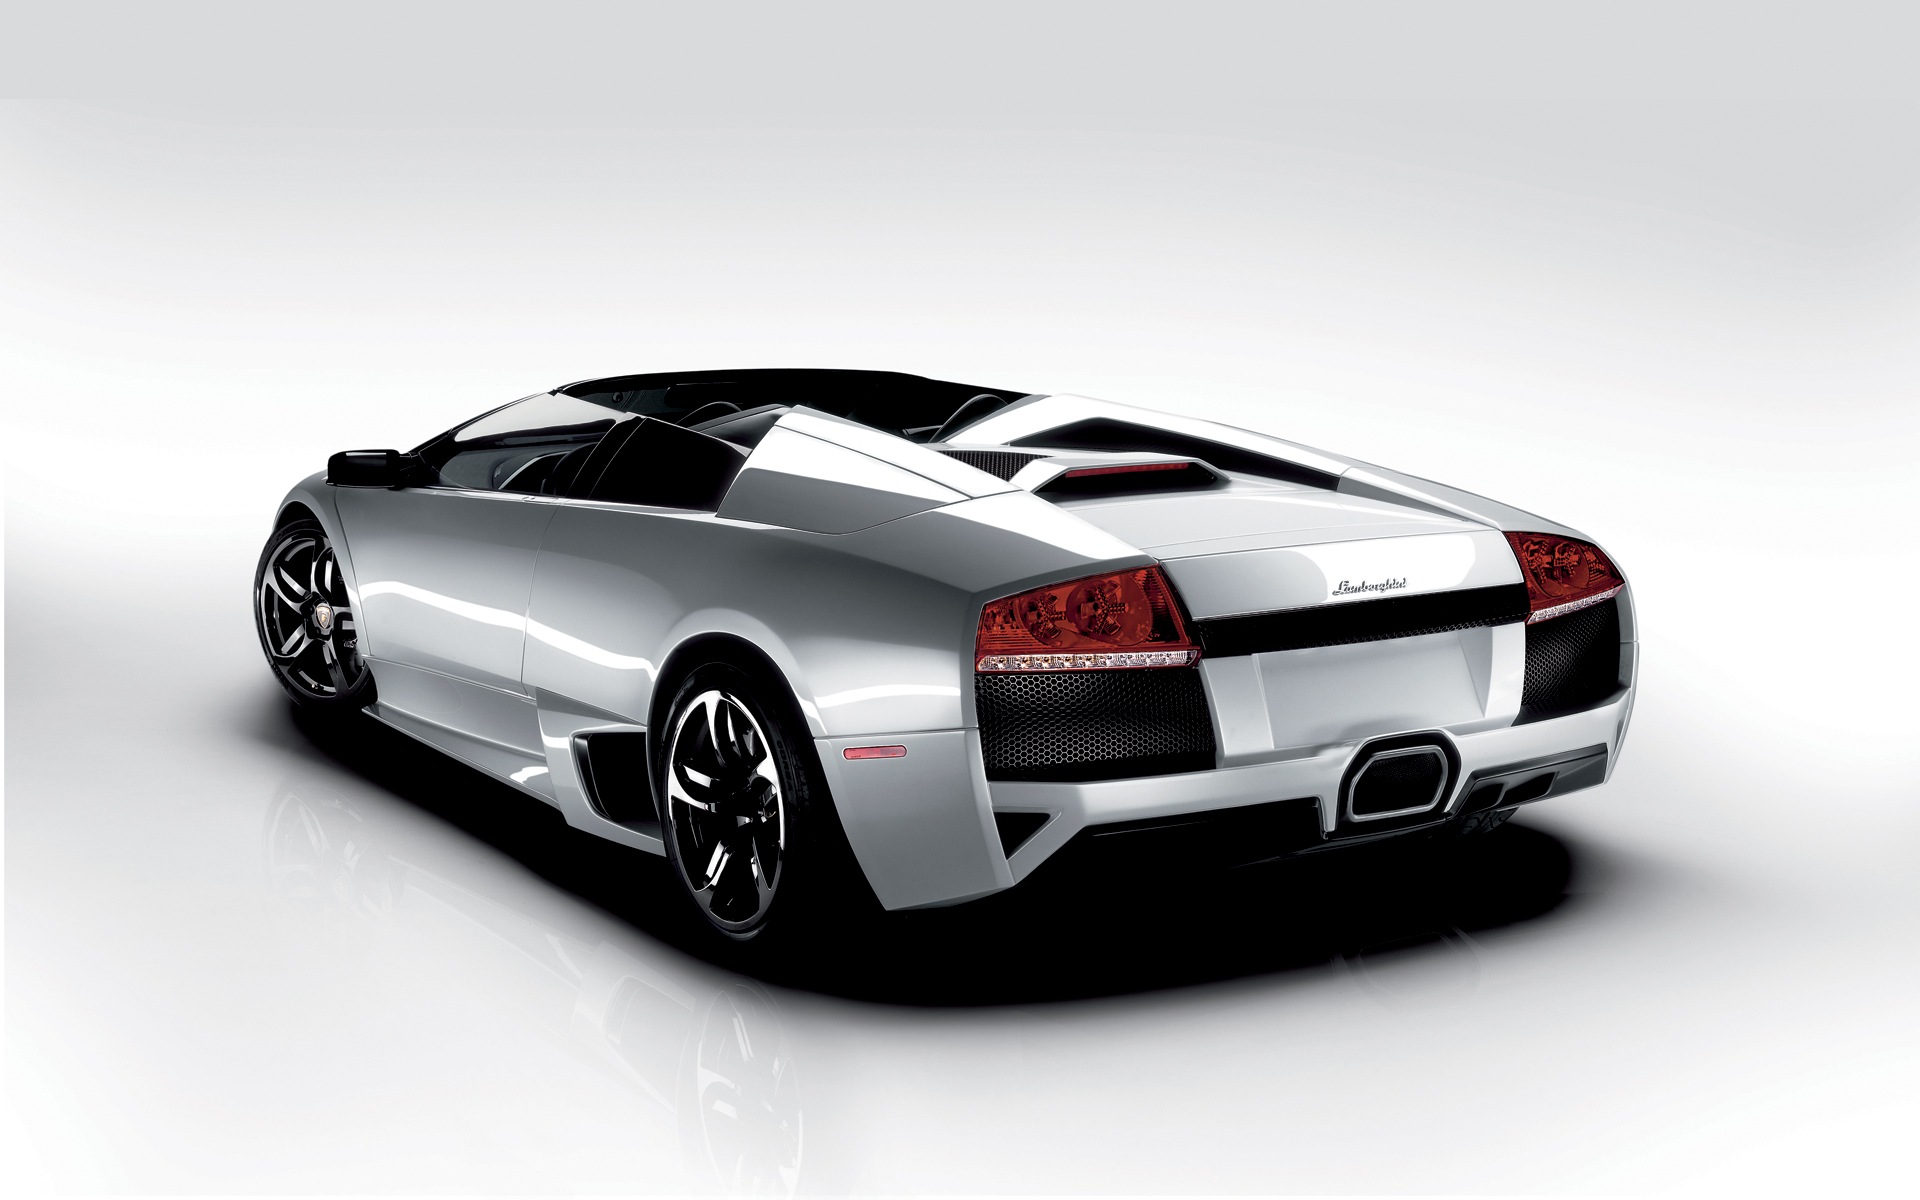 Silver and white Lamborghini Murcielago car